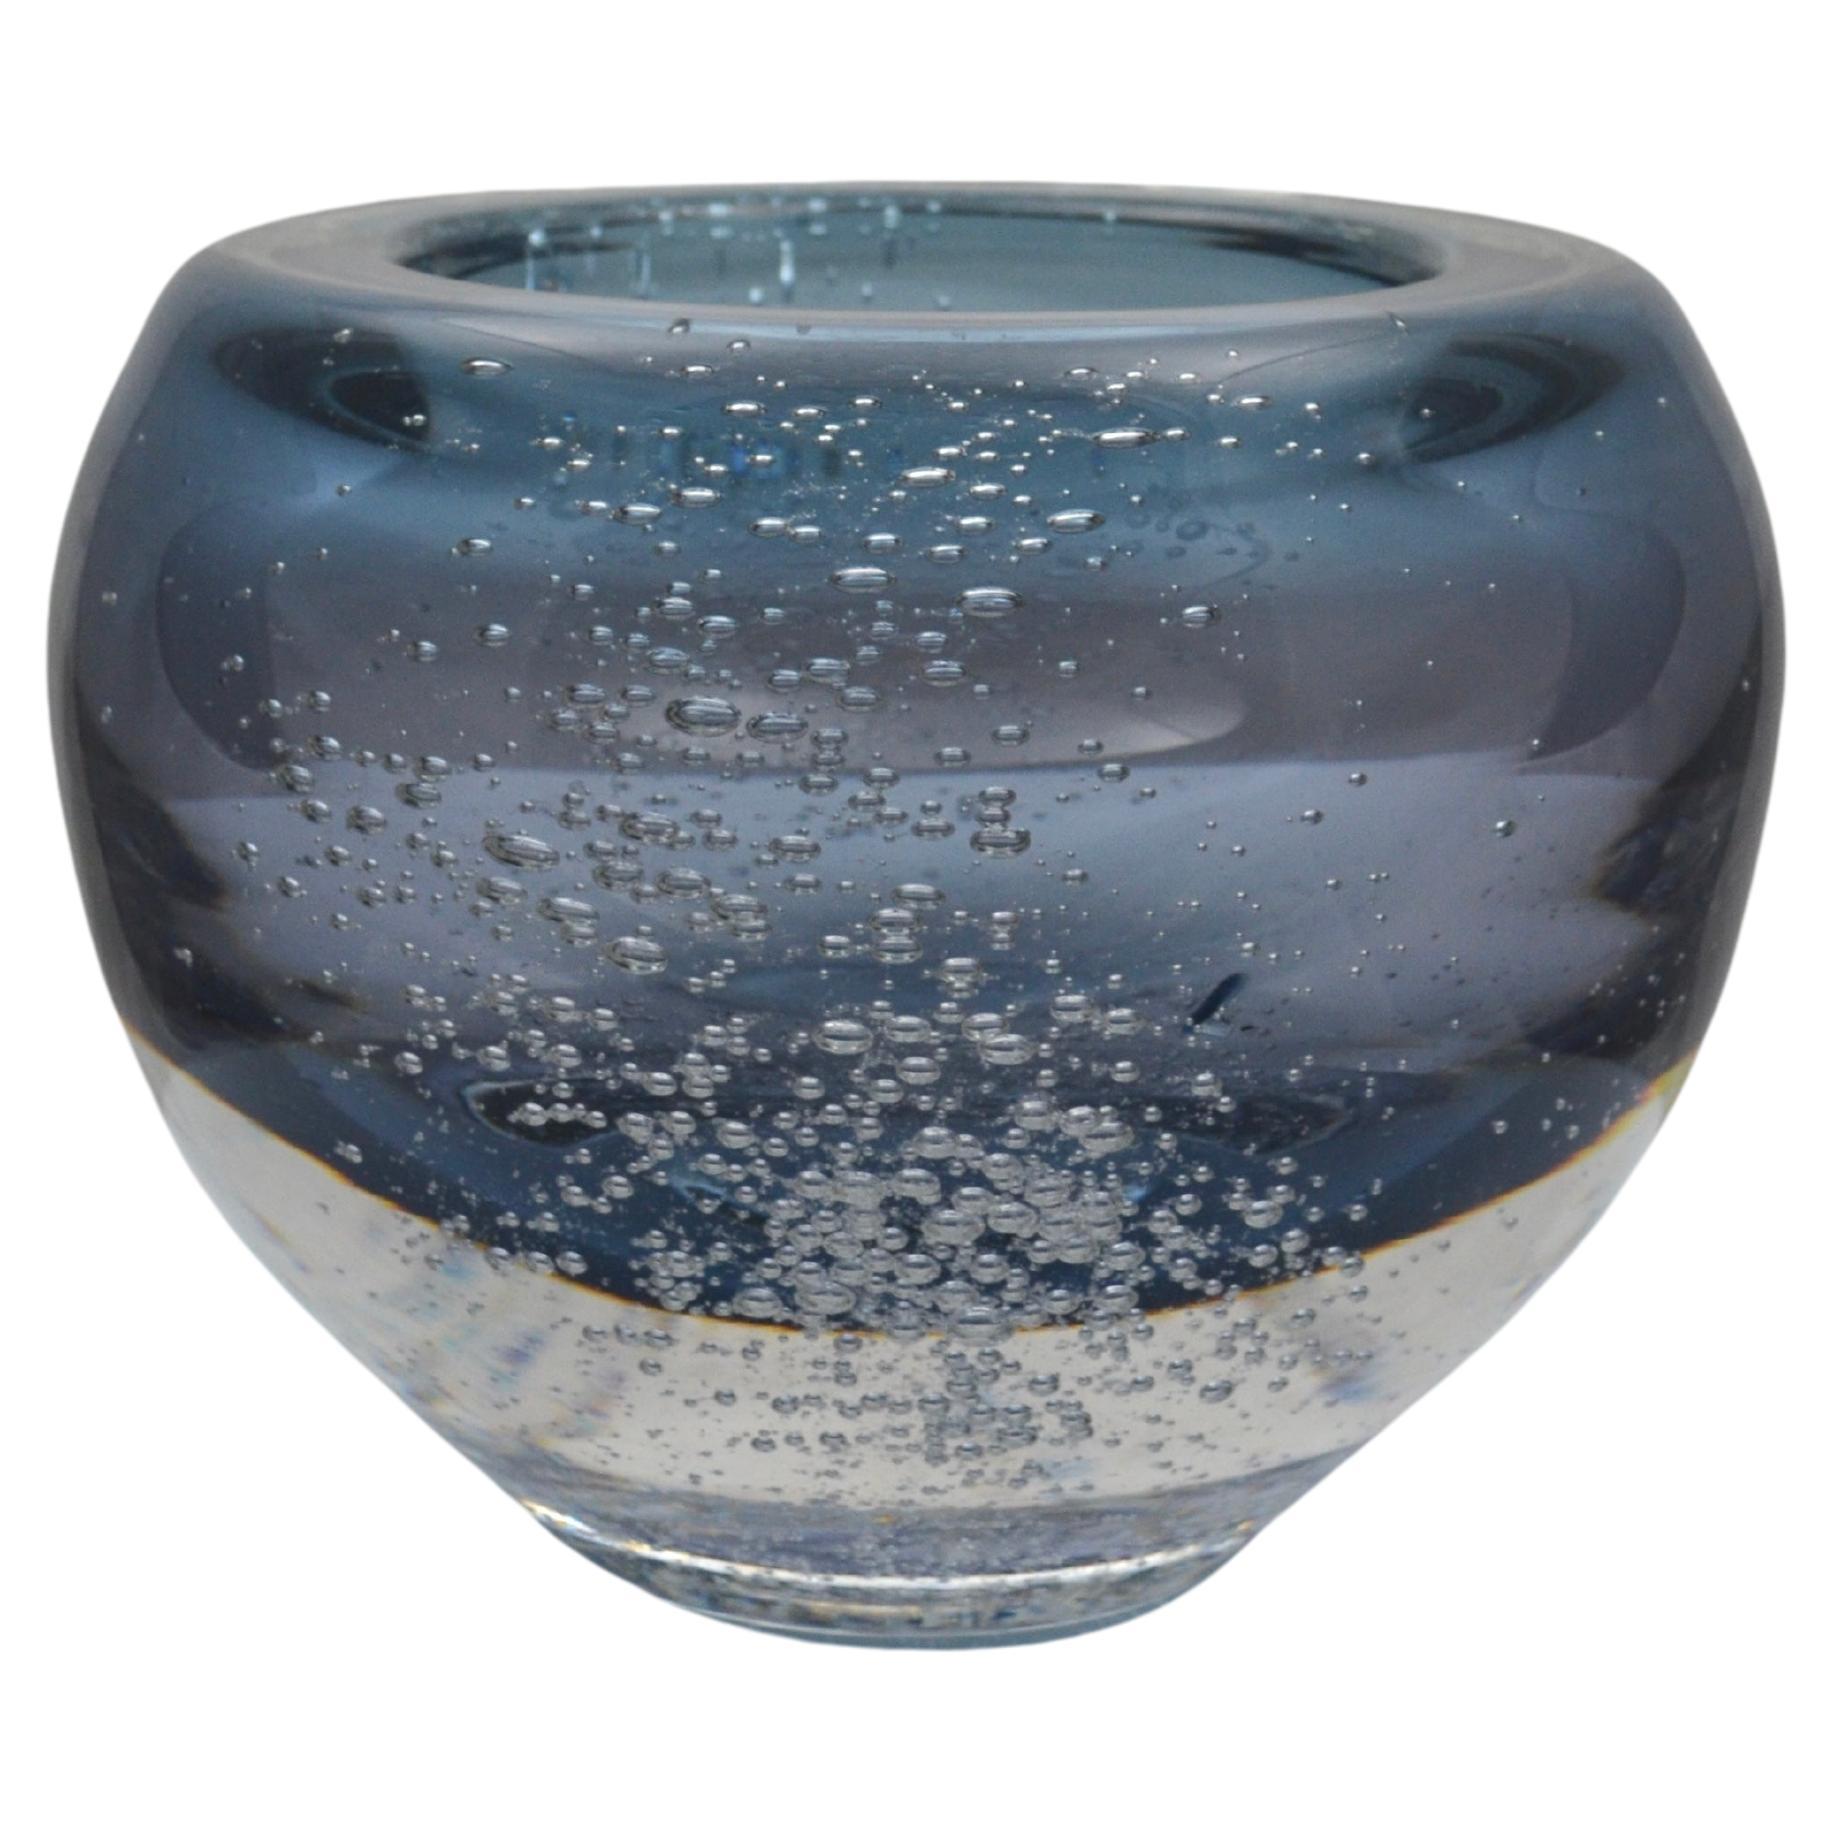 Eco-Kristallvase „Bowl Bubbles“ von BF Glass Studio, 2021